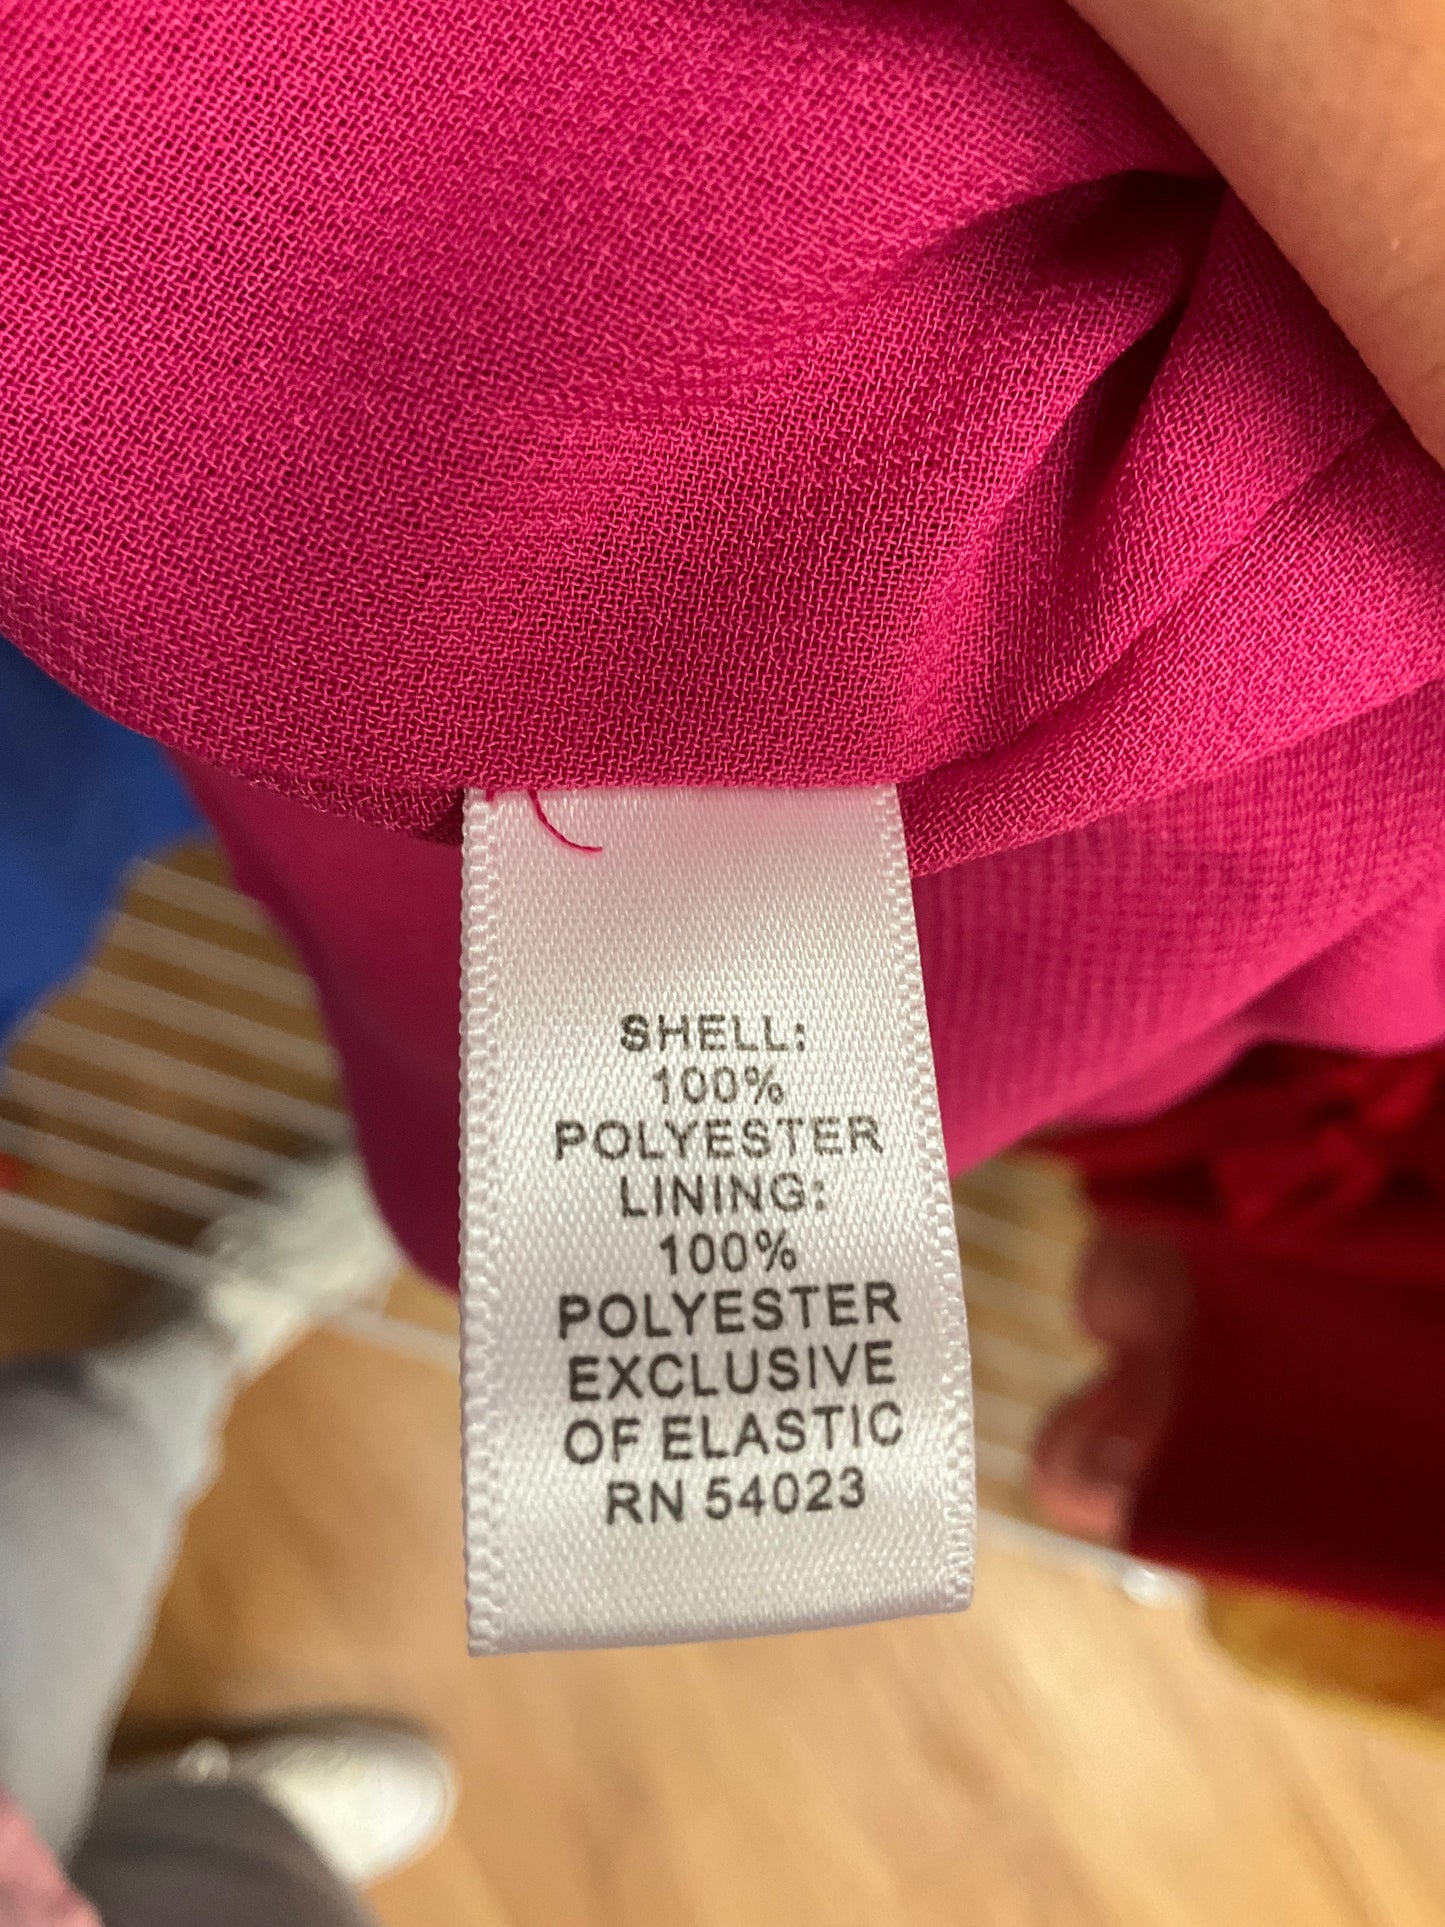 Pink Dress Casual Short Banana Republic, Size 8